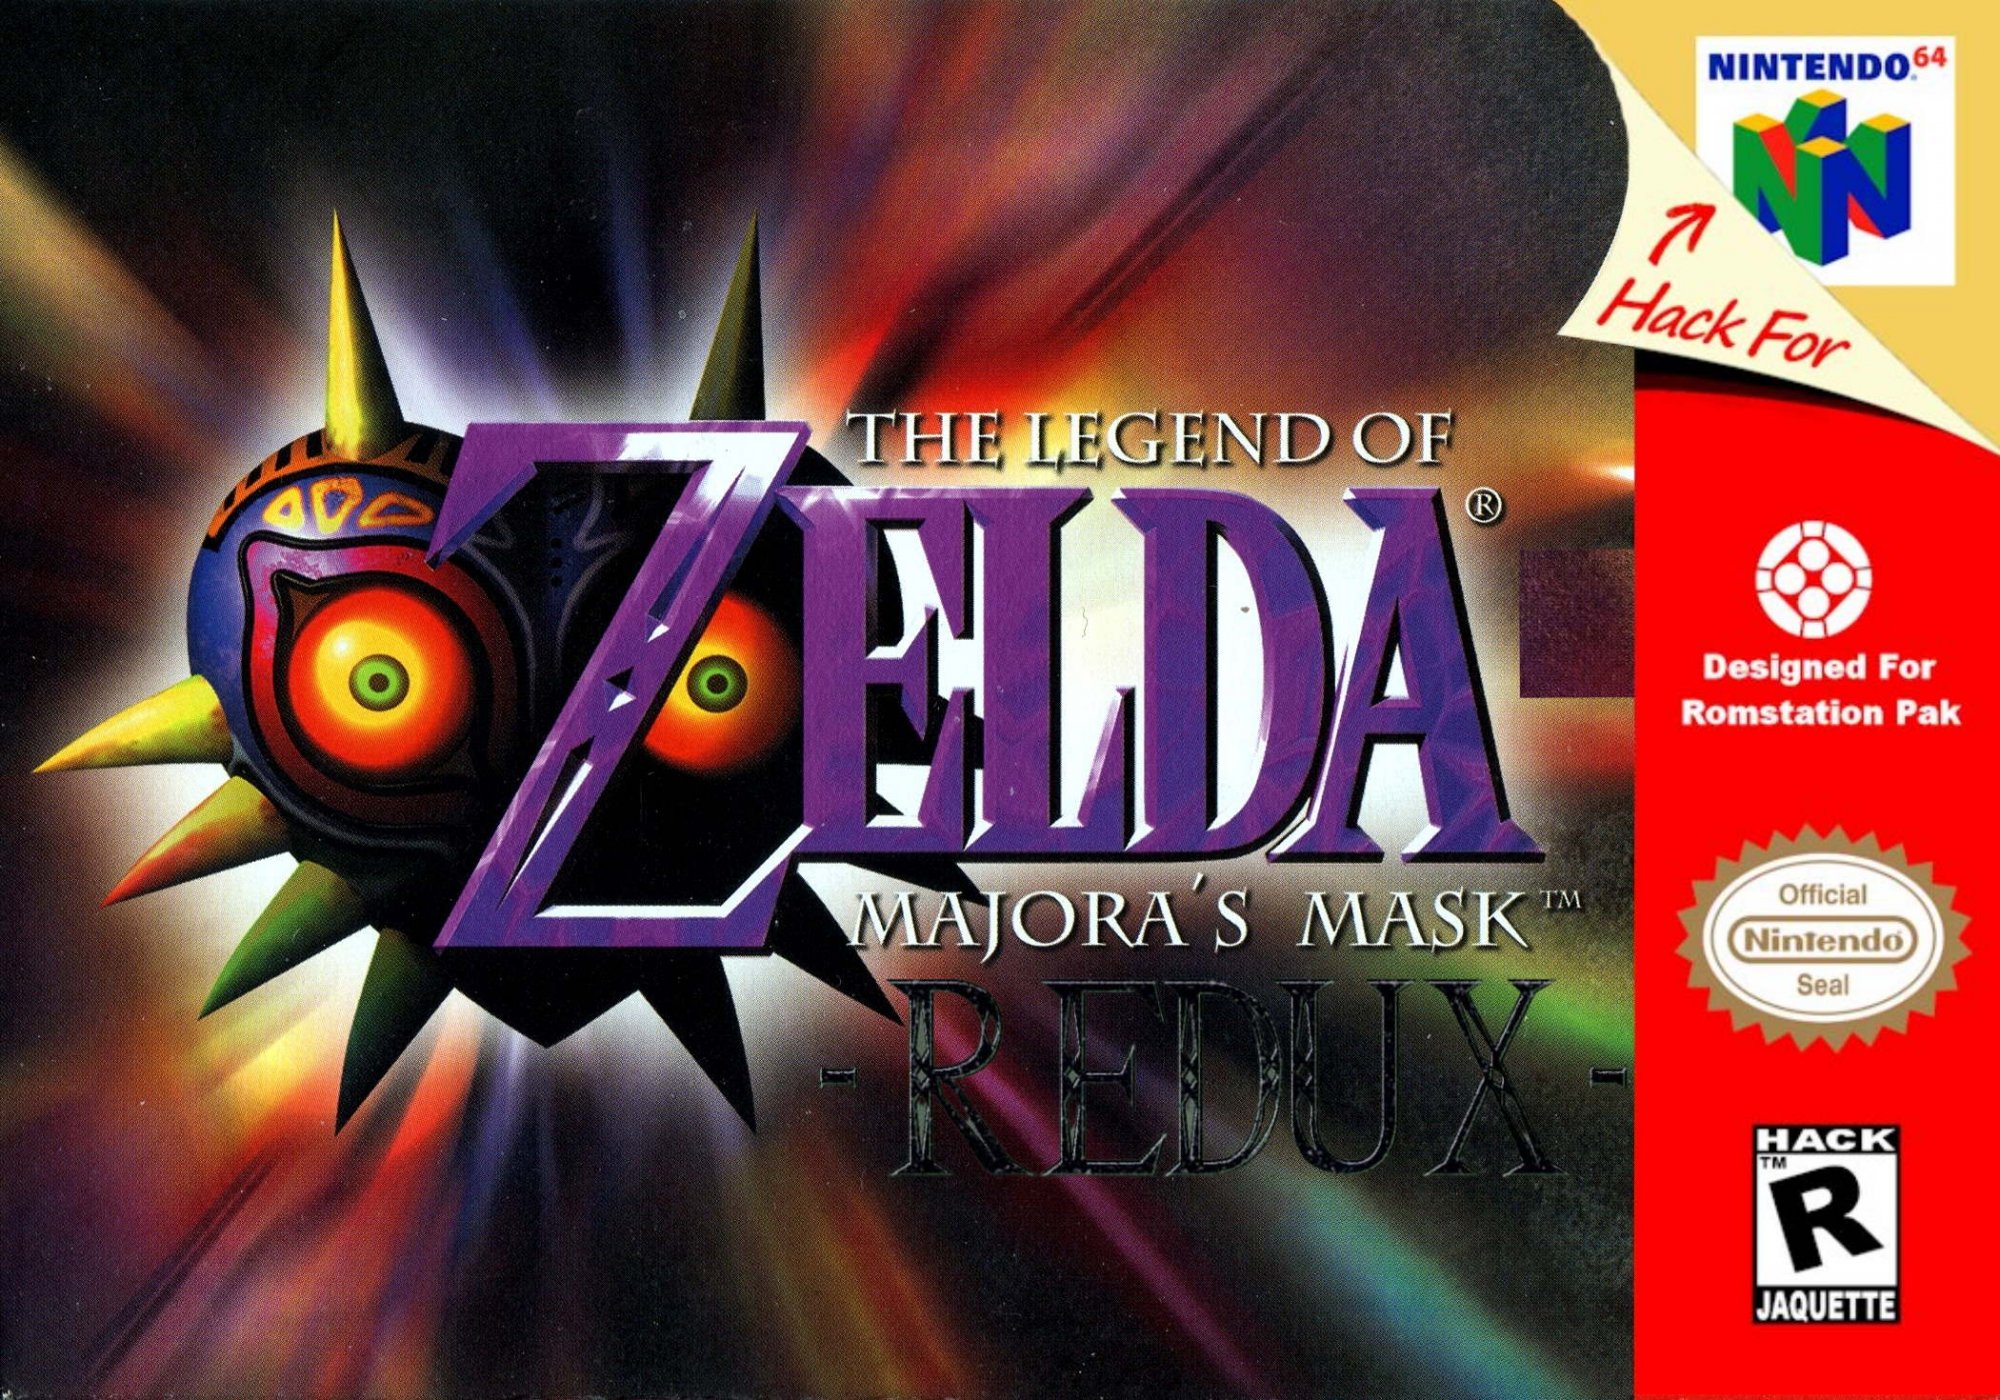 The Legend of Zelda: Majora’s Mask Redux